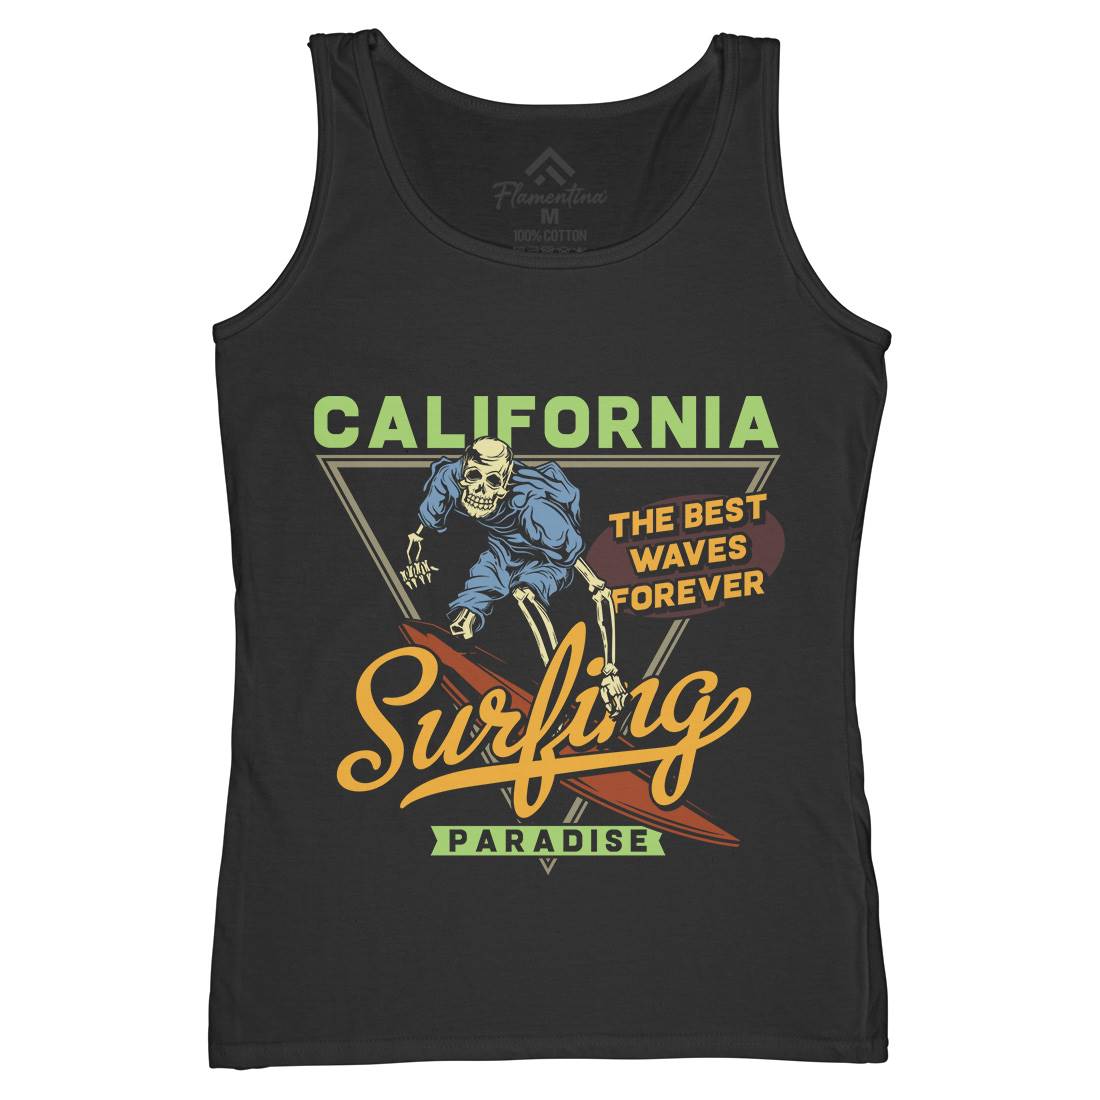 California Surfing Womens Organic Tank Top Vest Surf B875